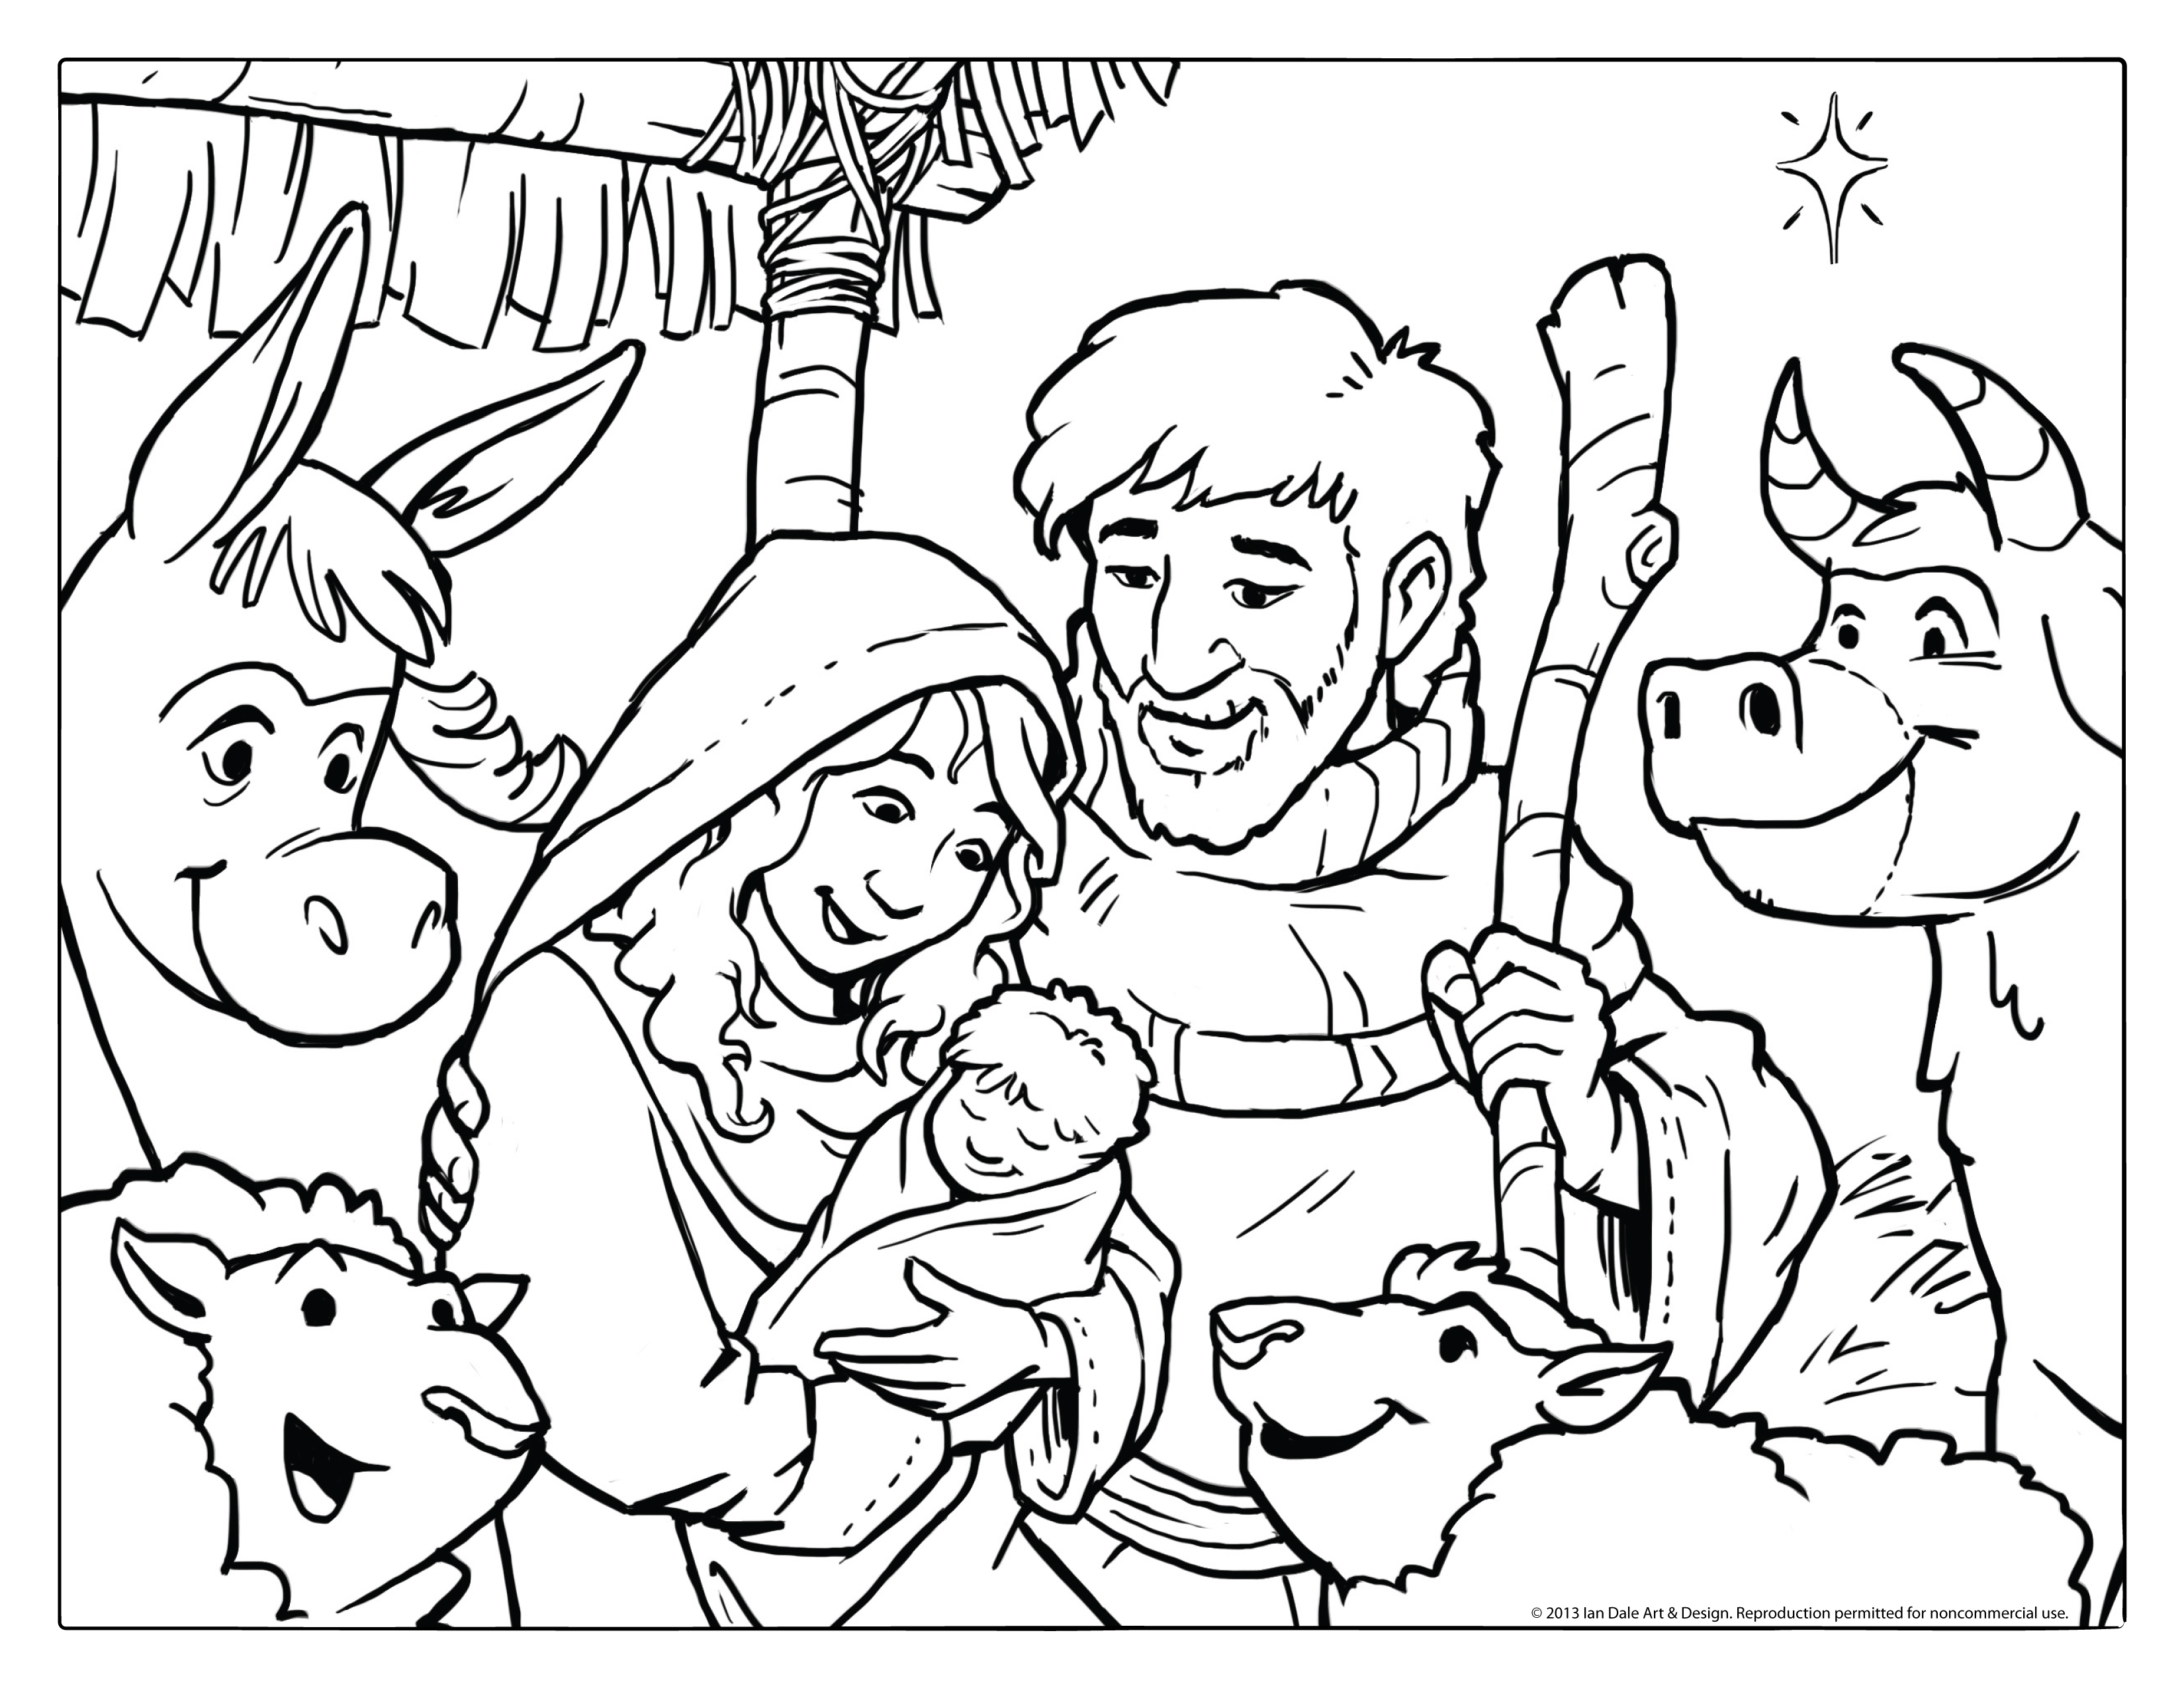 Ian dale art design blog christmas nativity scene